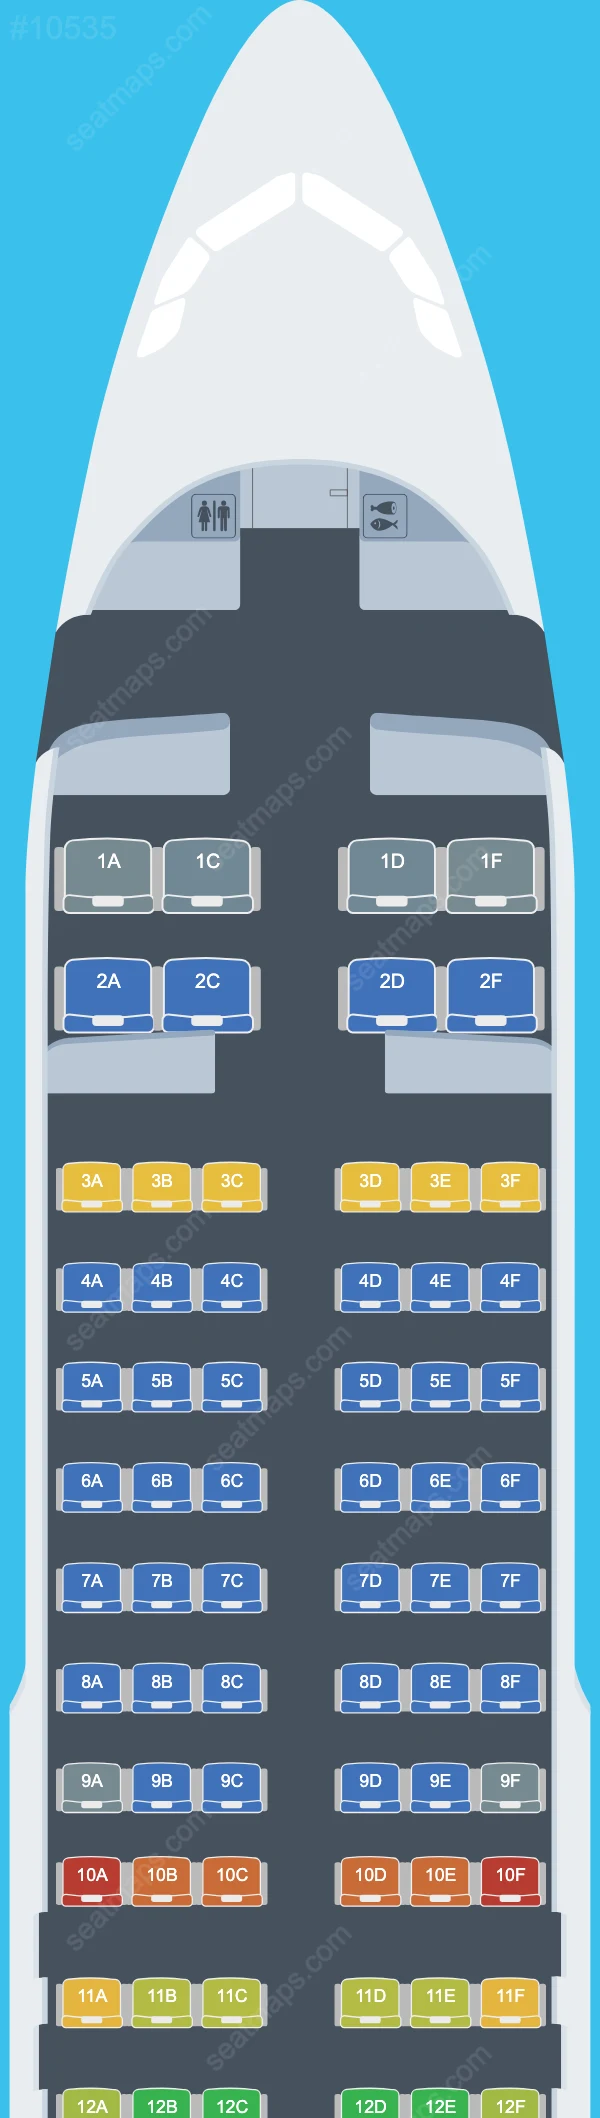 Air Travel Airbus A320 Seat Maps A320-200neo